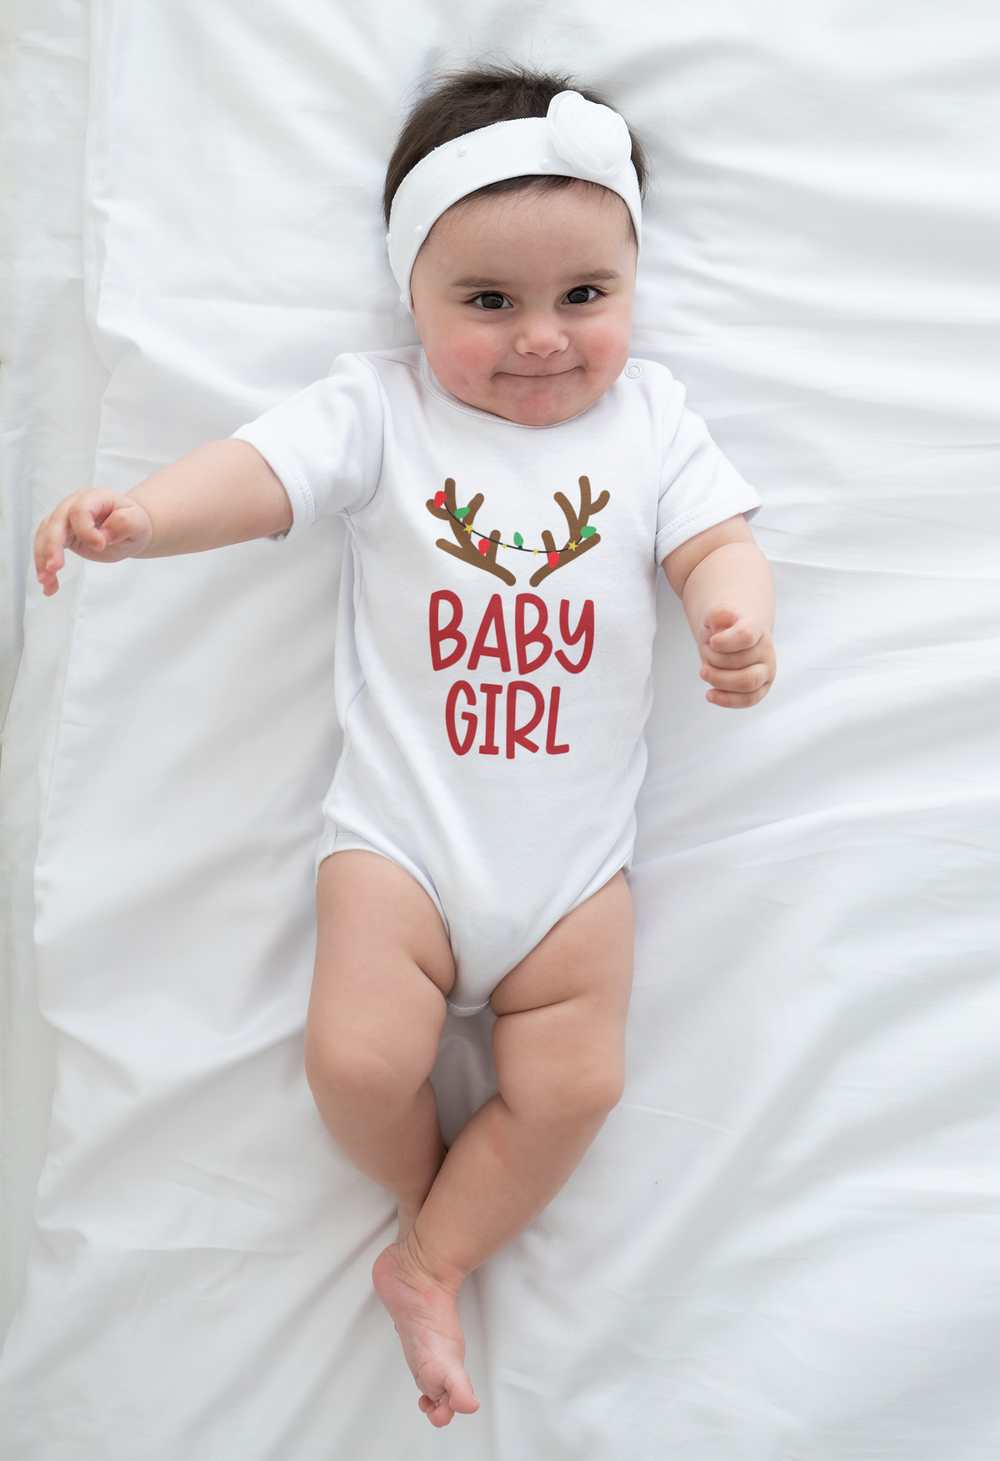 Baby Girl Reindeer Onesie 90014515624975456800 16 Kids clothes Worlds Worst Tees